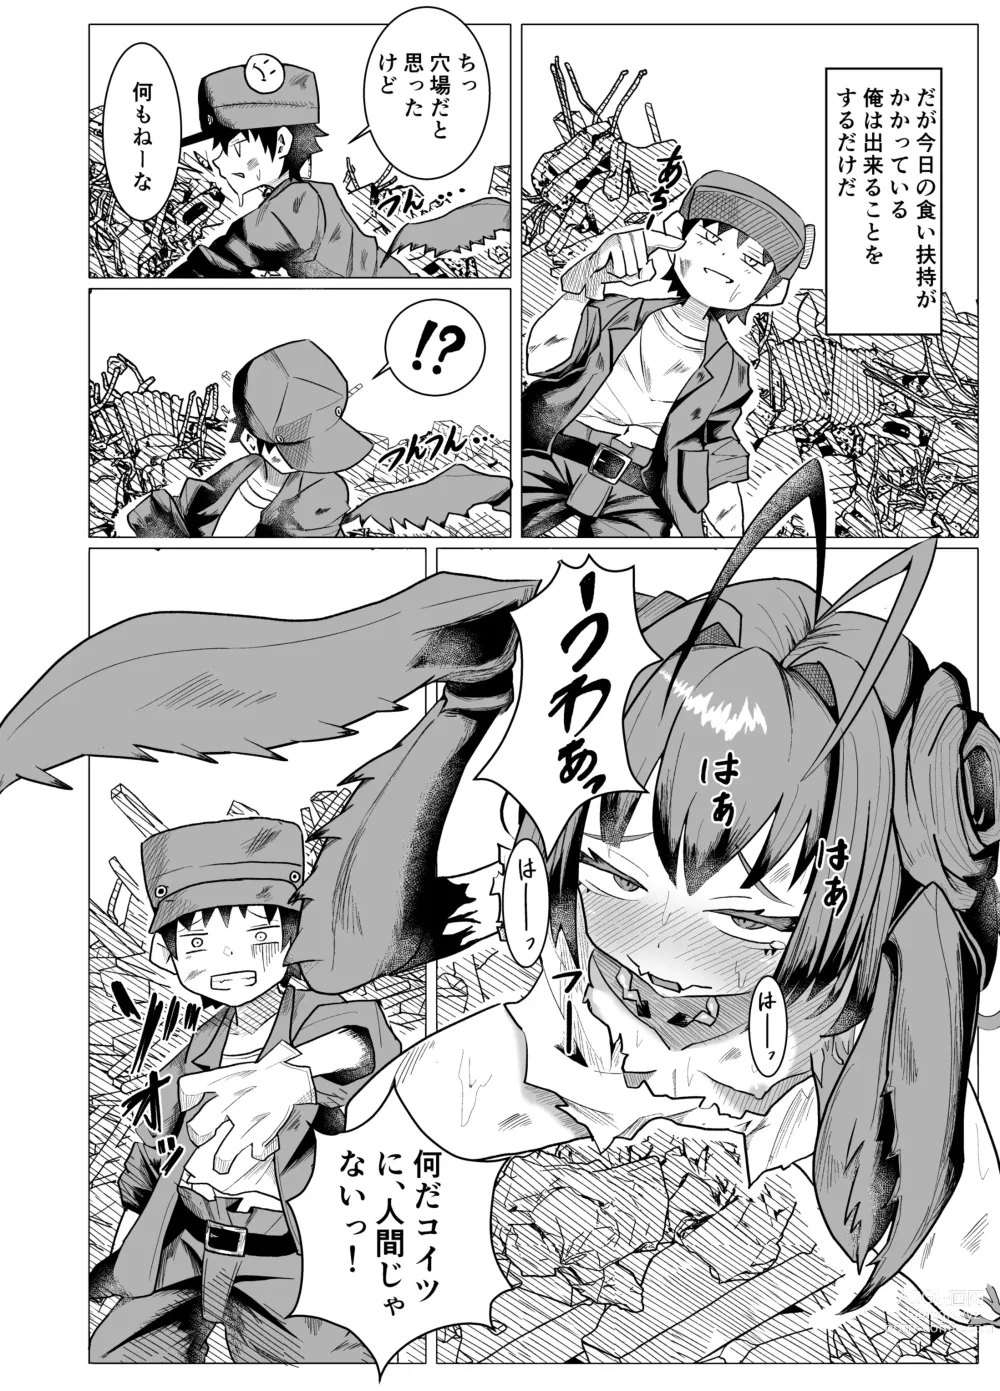 Page 4 of doujinshi kama1JPG